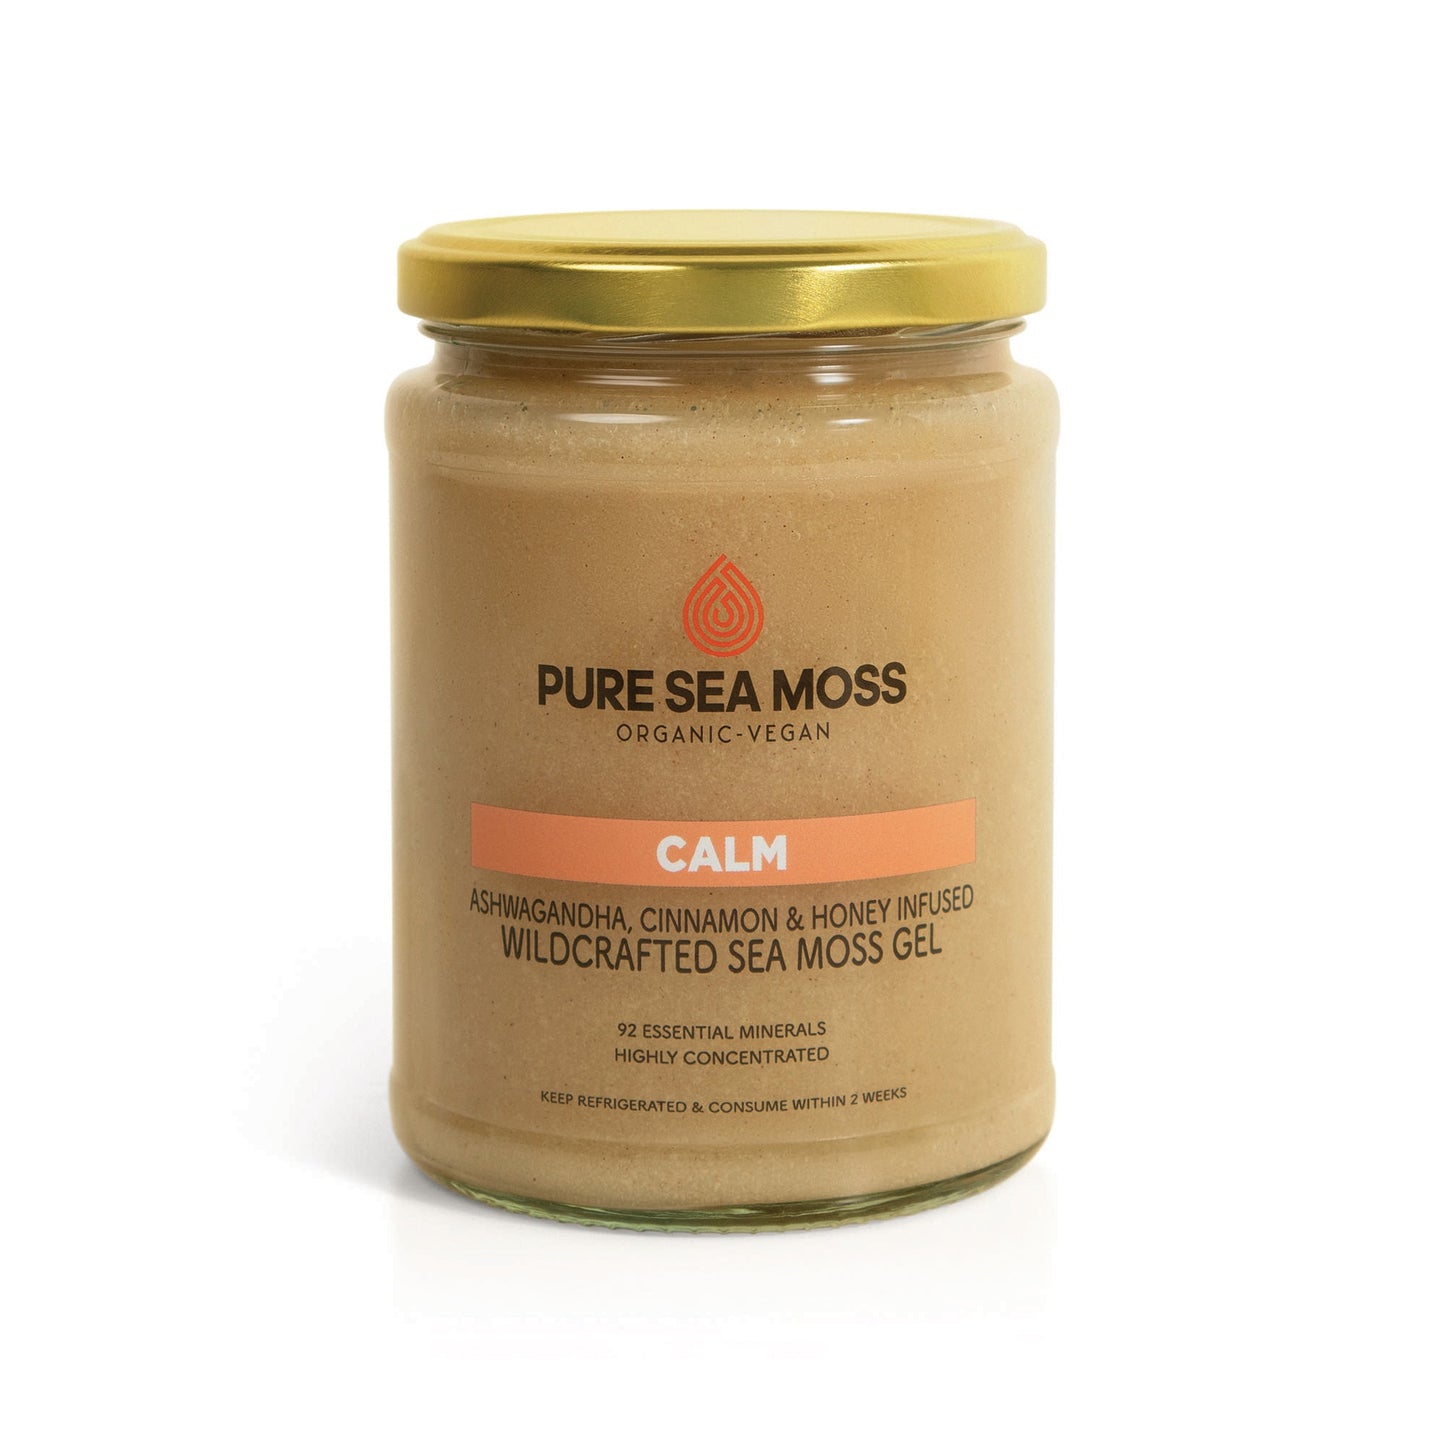 Calm - Ashwagandha, Cinnamon & Raw Honey Sea Moss Gel sea moss gel Pure Sea Moss UK Pureseamossuk